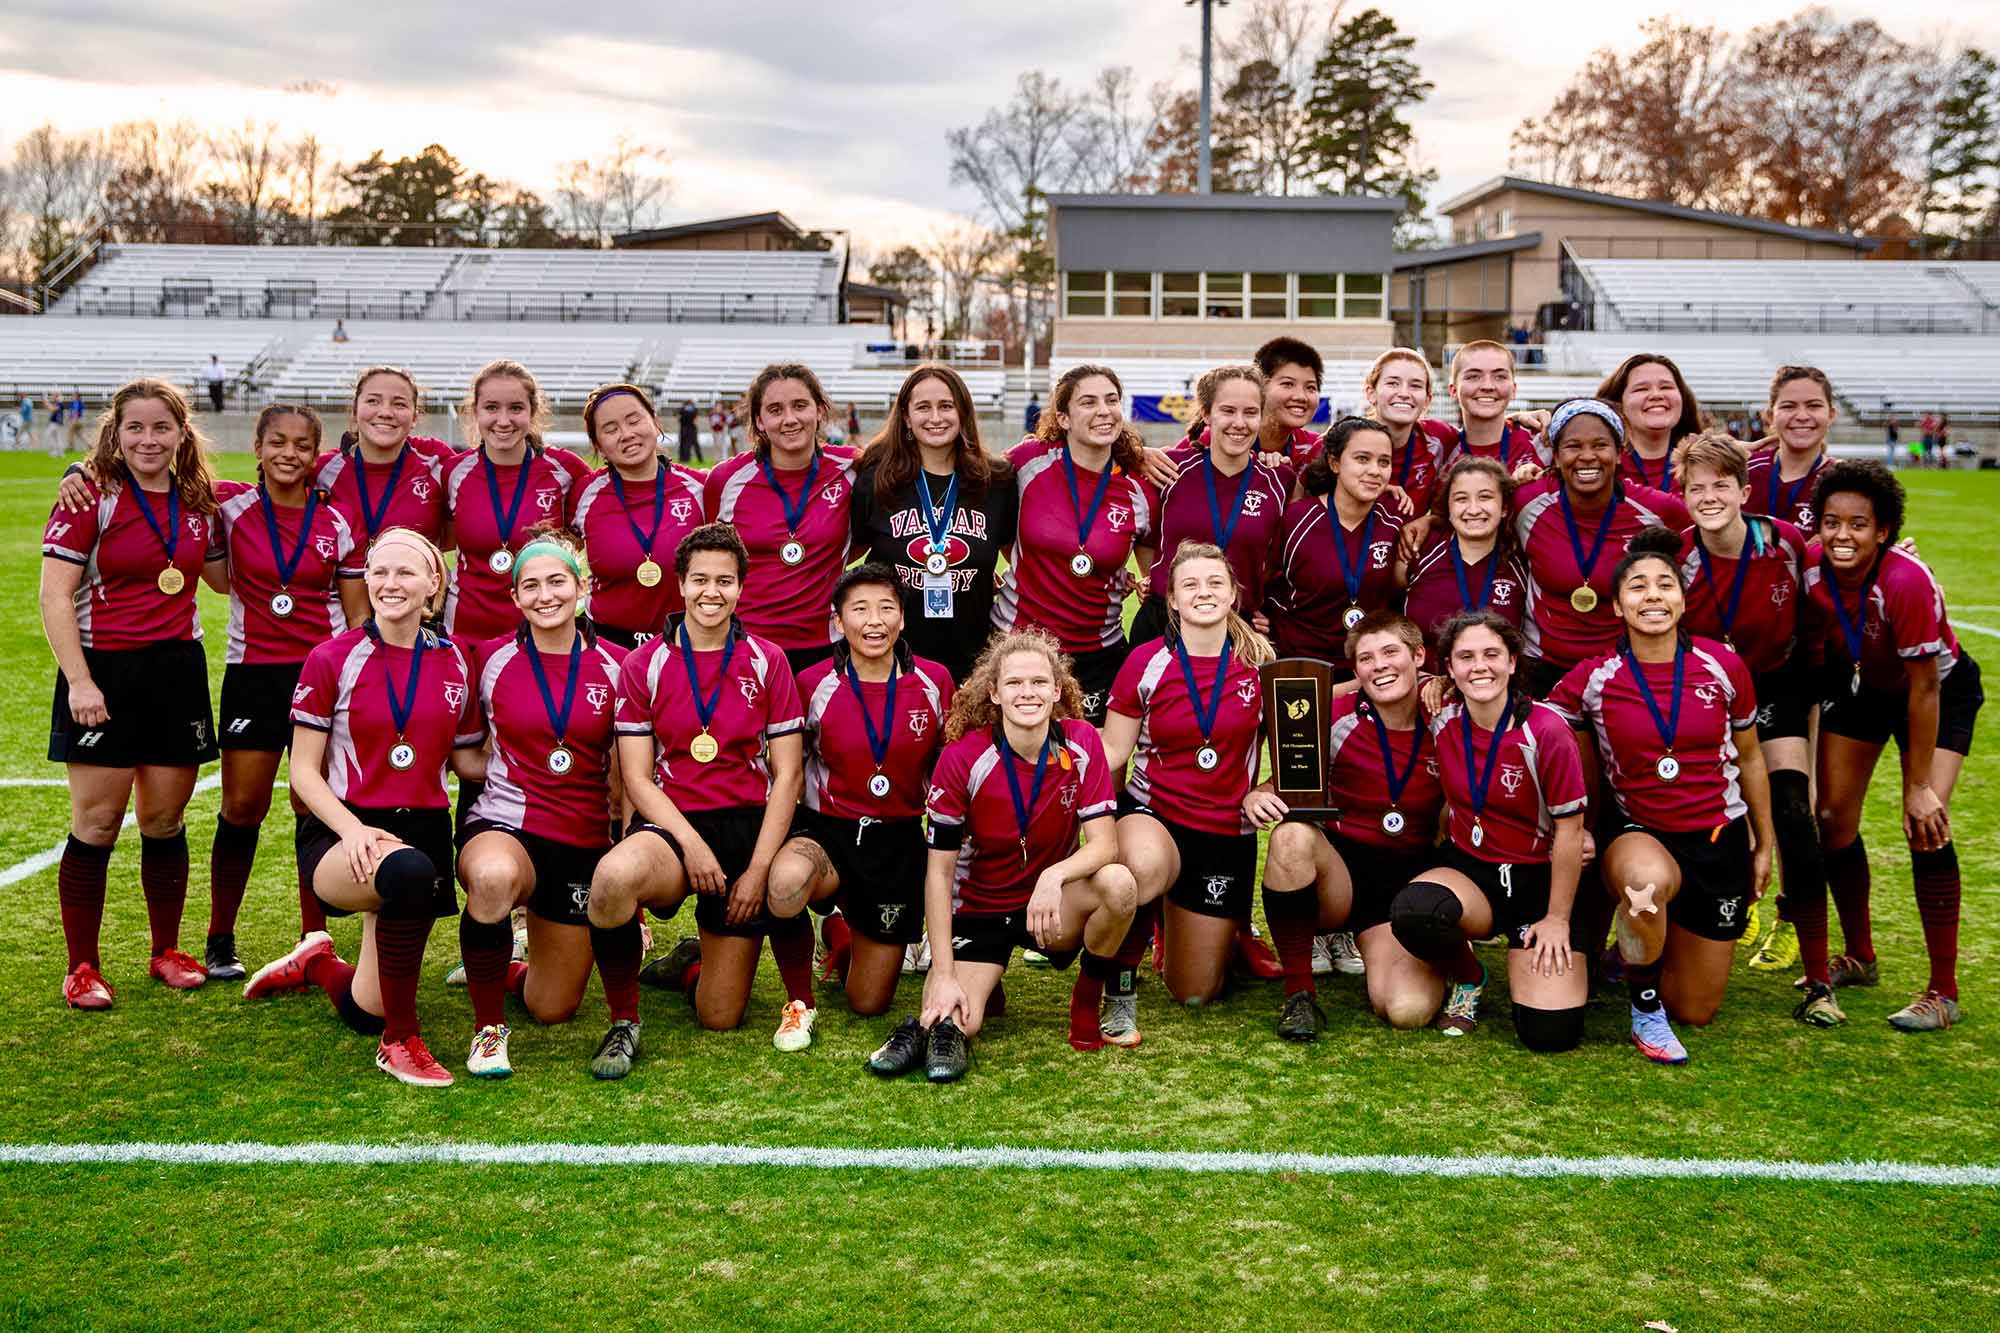 Vassar’s women’s ruby team recently won a national championship!